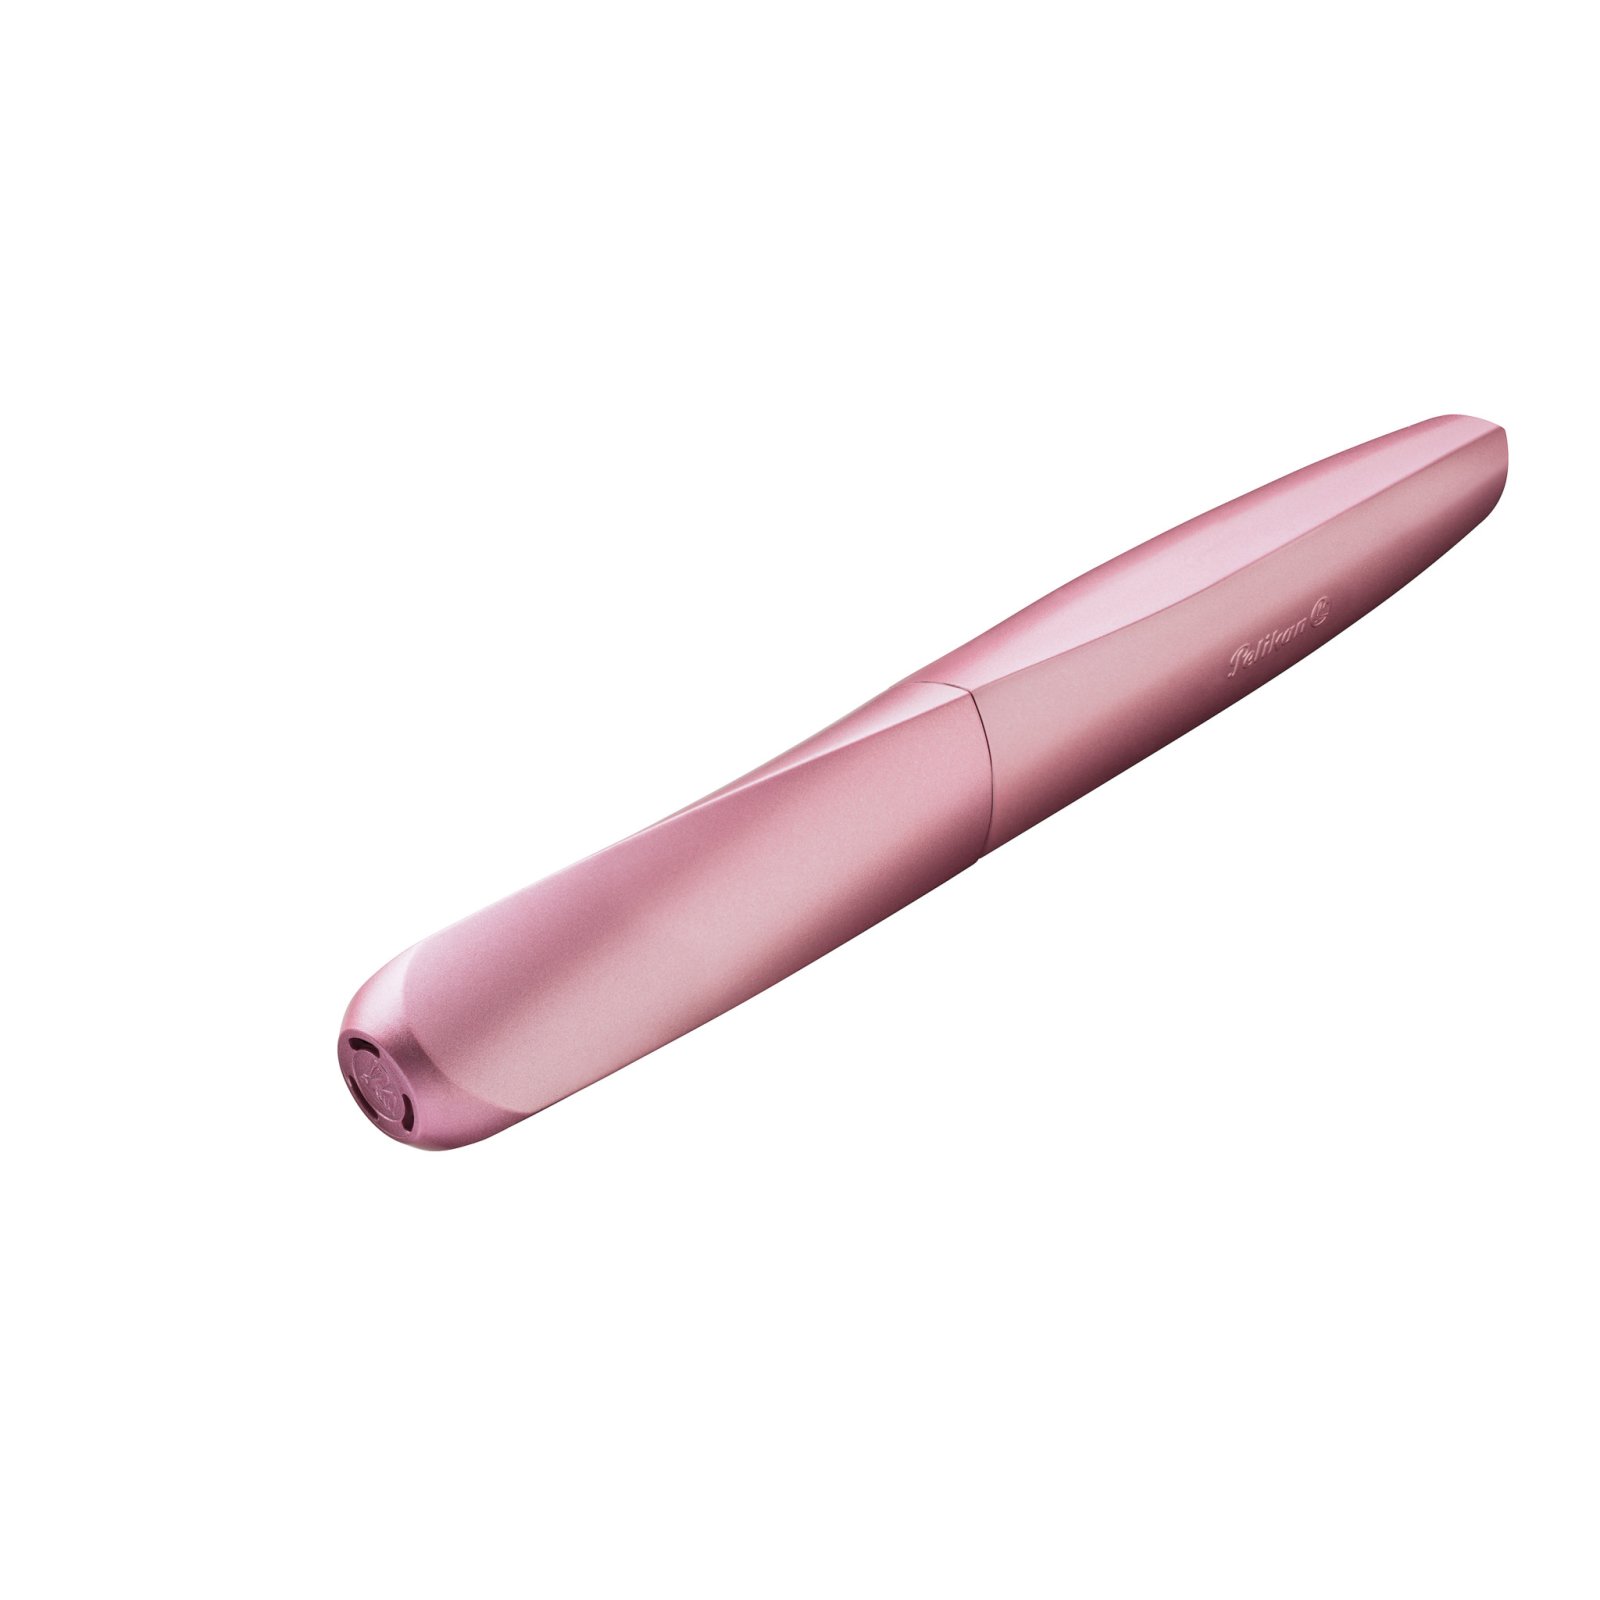 Pelikan Twist Tintenroller Girly - Rose, L+R 806299 10,50 € sch, rosa-metallic